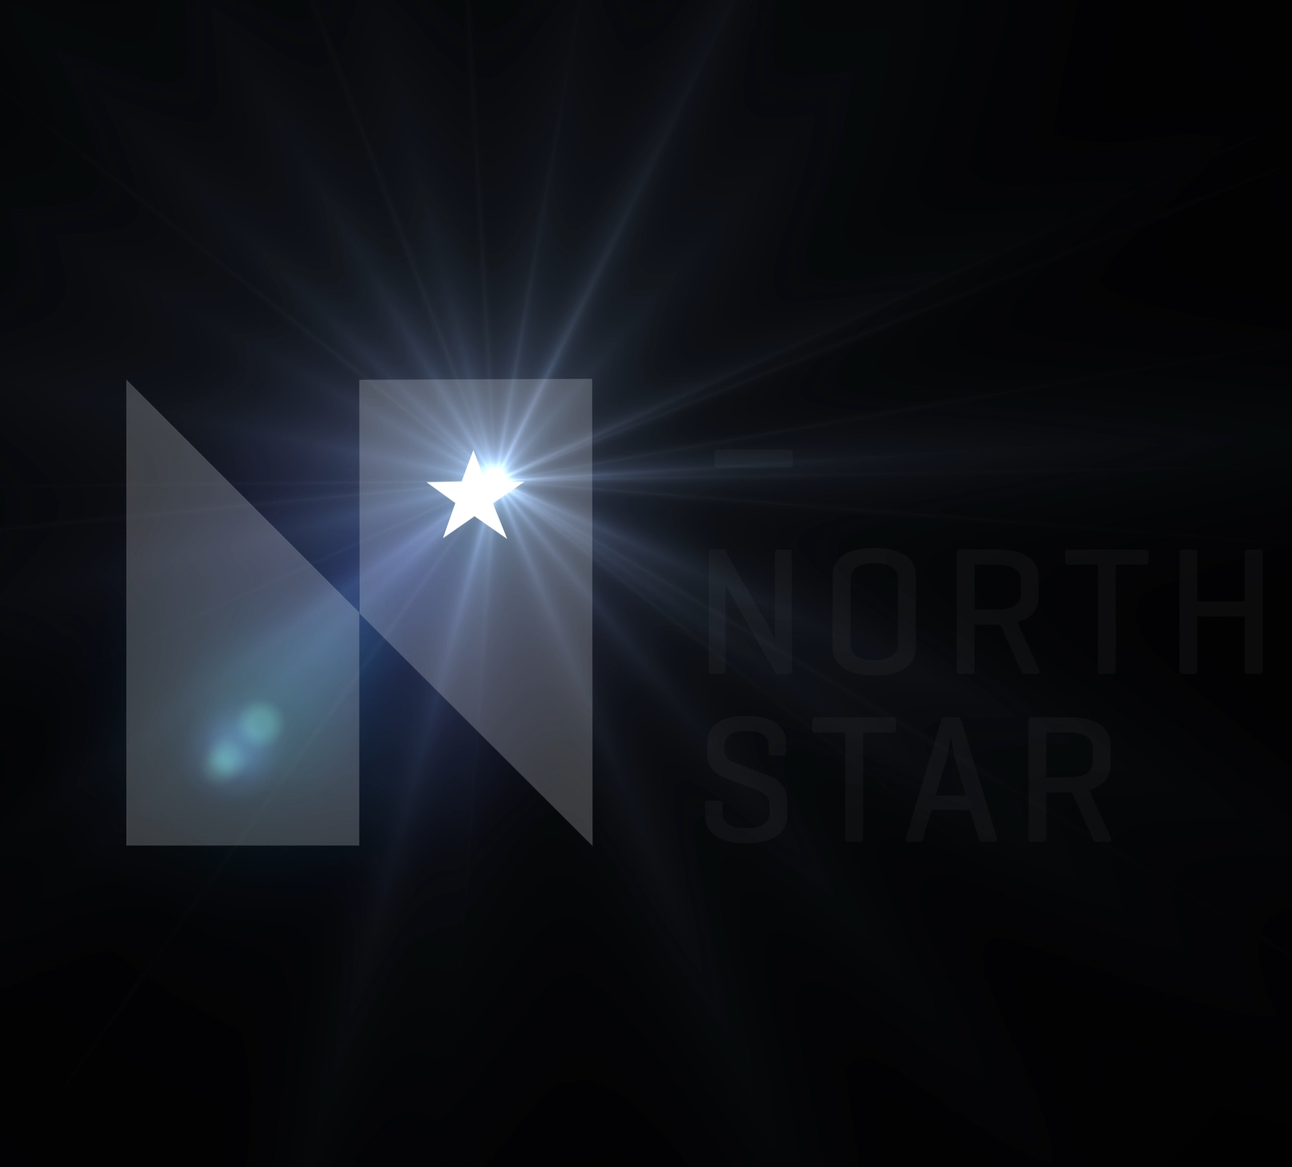 North Star Management